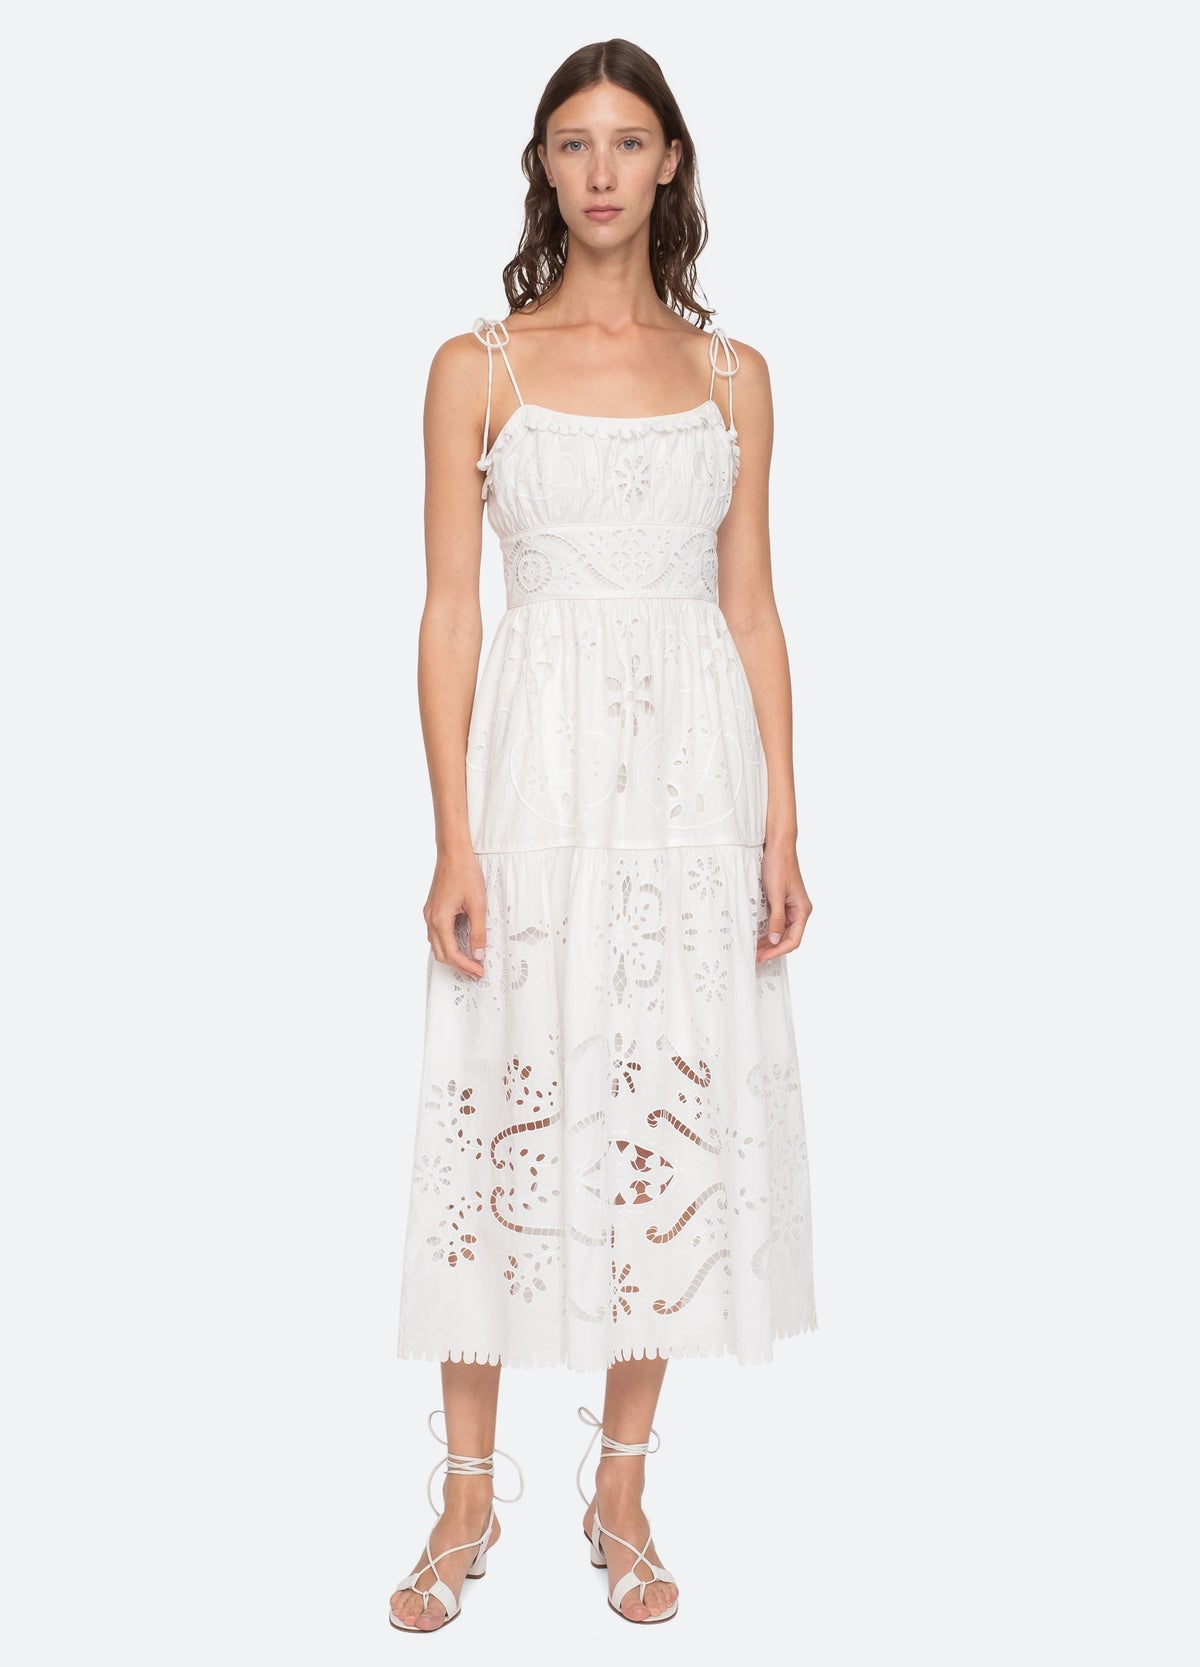 white-liat dress-front view - 9